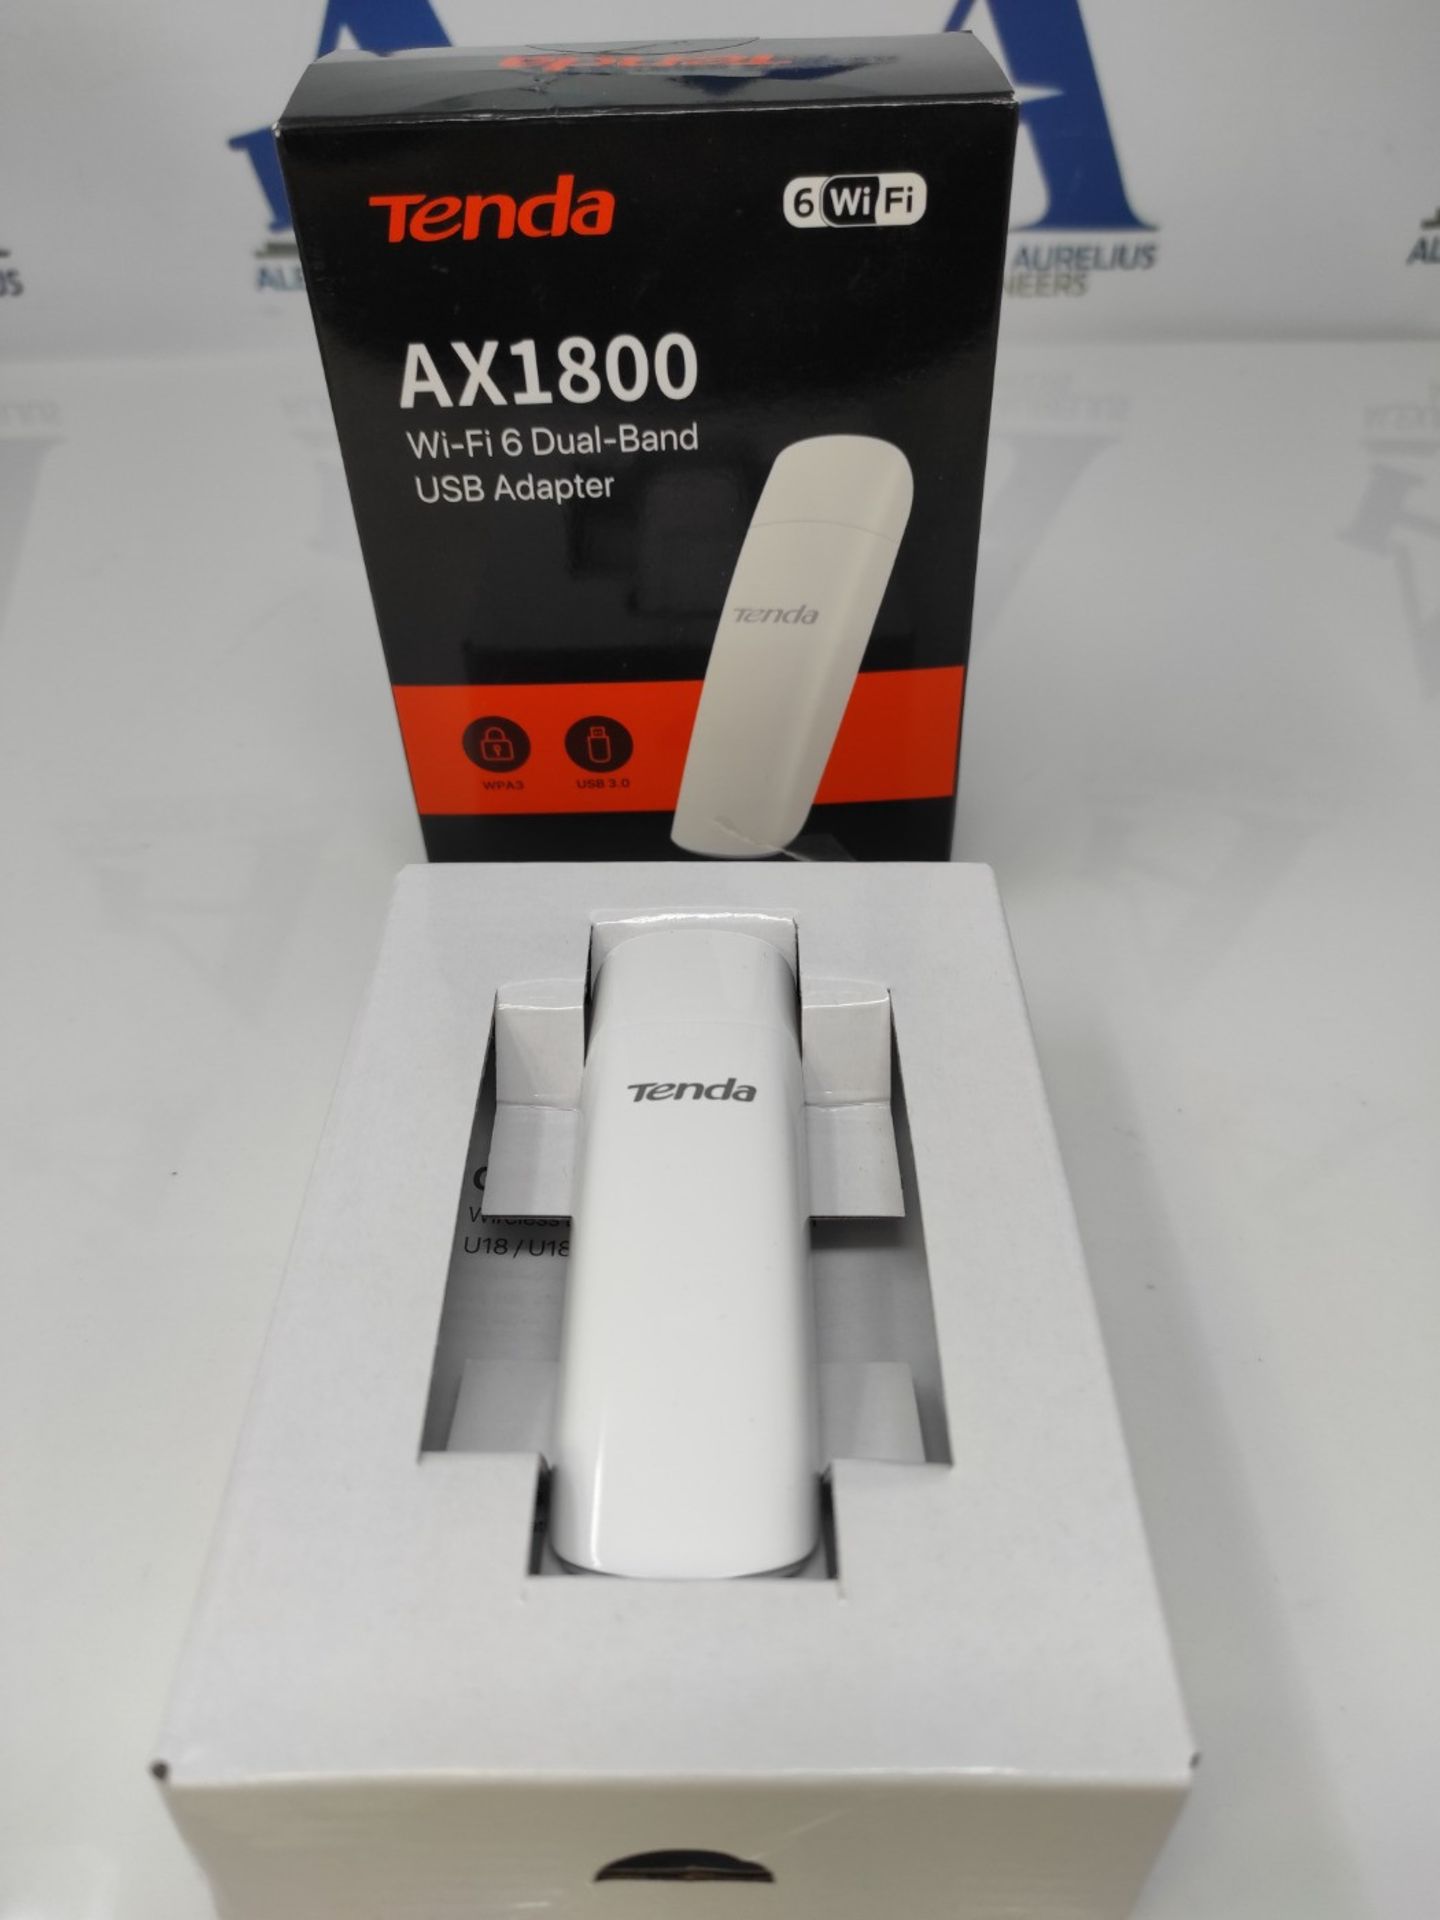 Tenda U18 AX1800 WiFi 6, USB 3.0 WiFi Adapter, Dual Band MU-MIMO 1800Mbps for PC/Deskt - Image 2 of 2